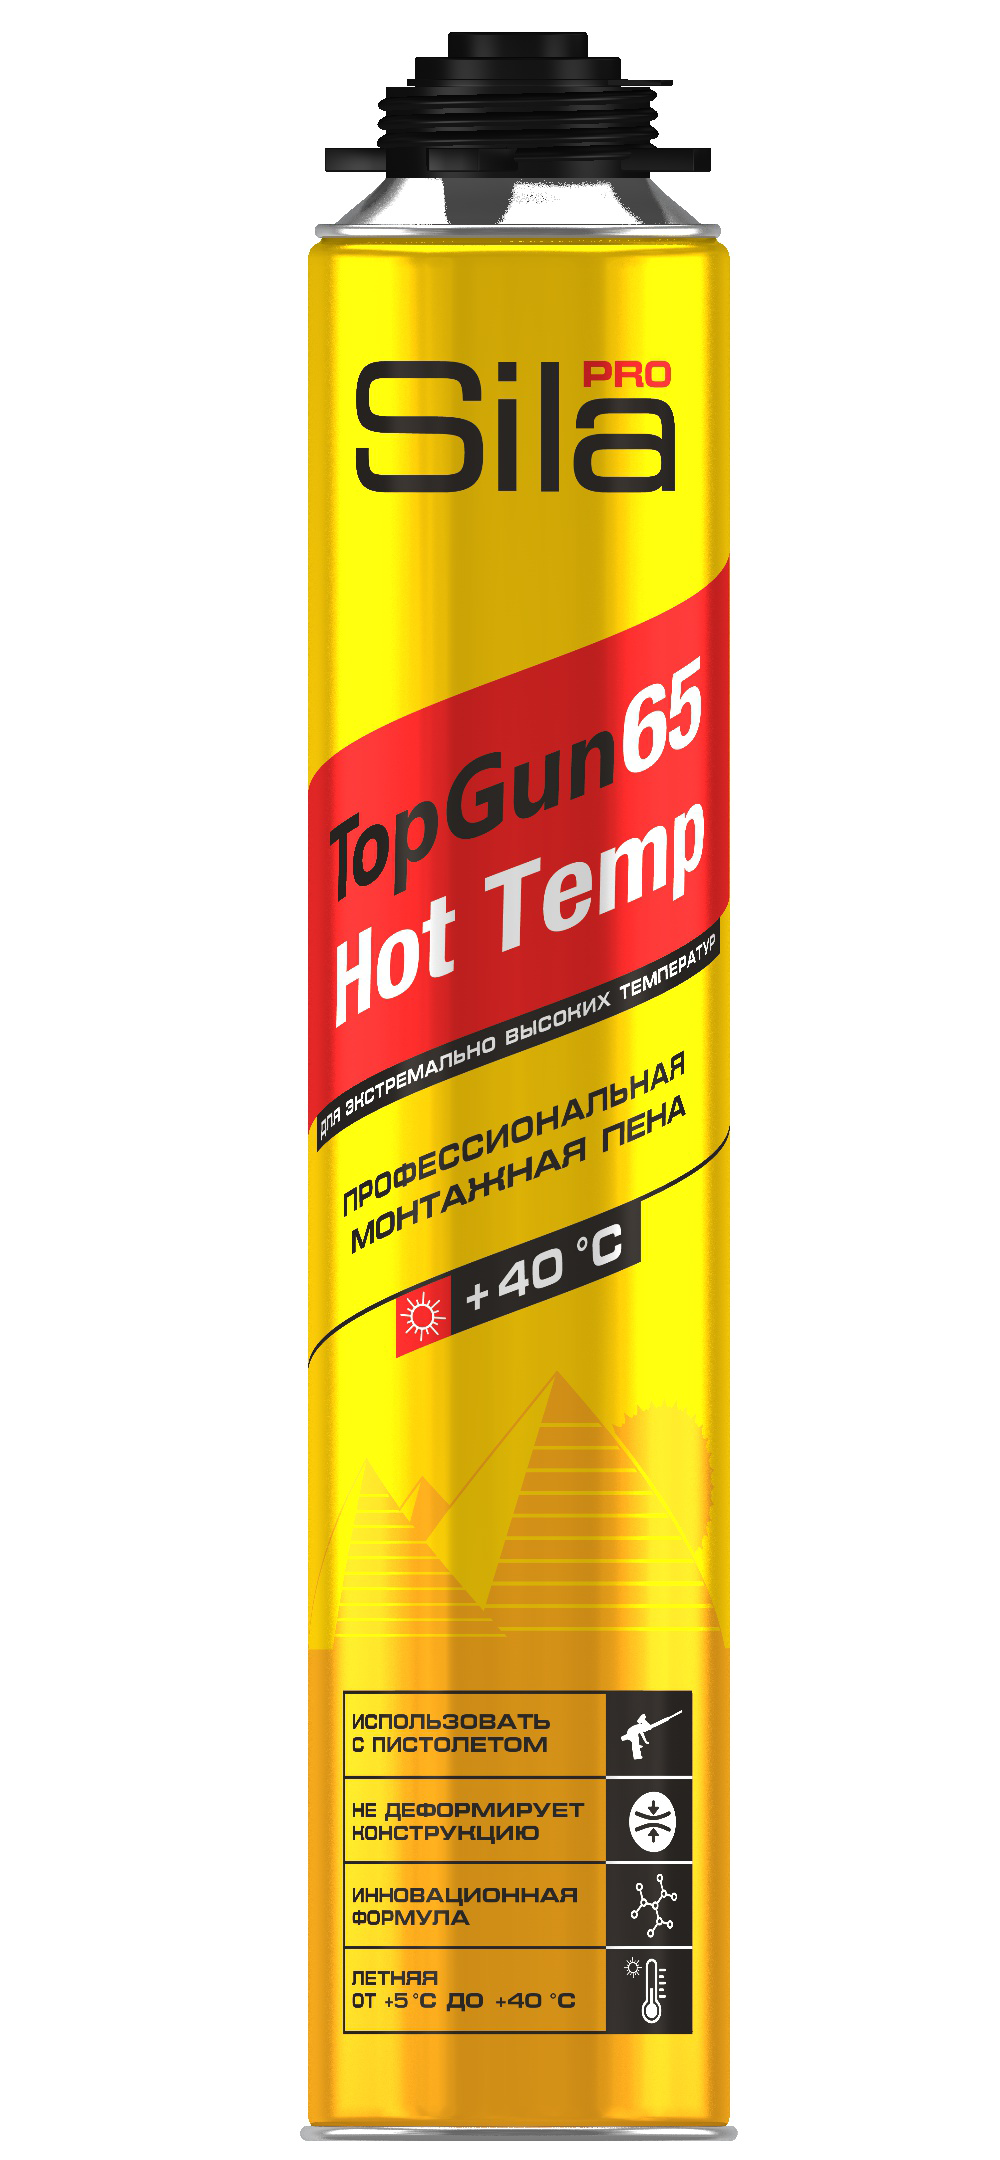 Sila Pro TopGun 65 Hot Temp